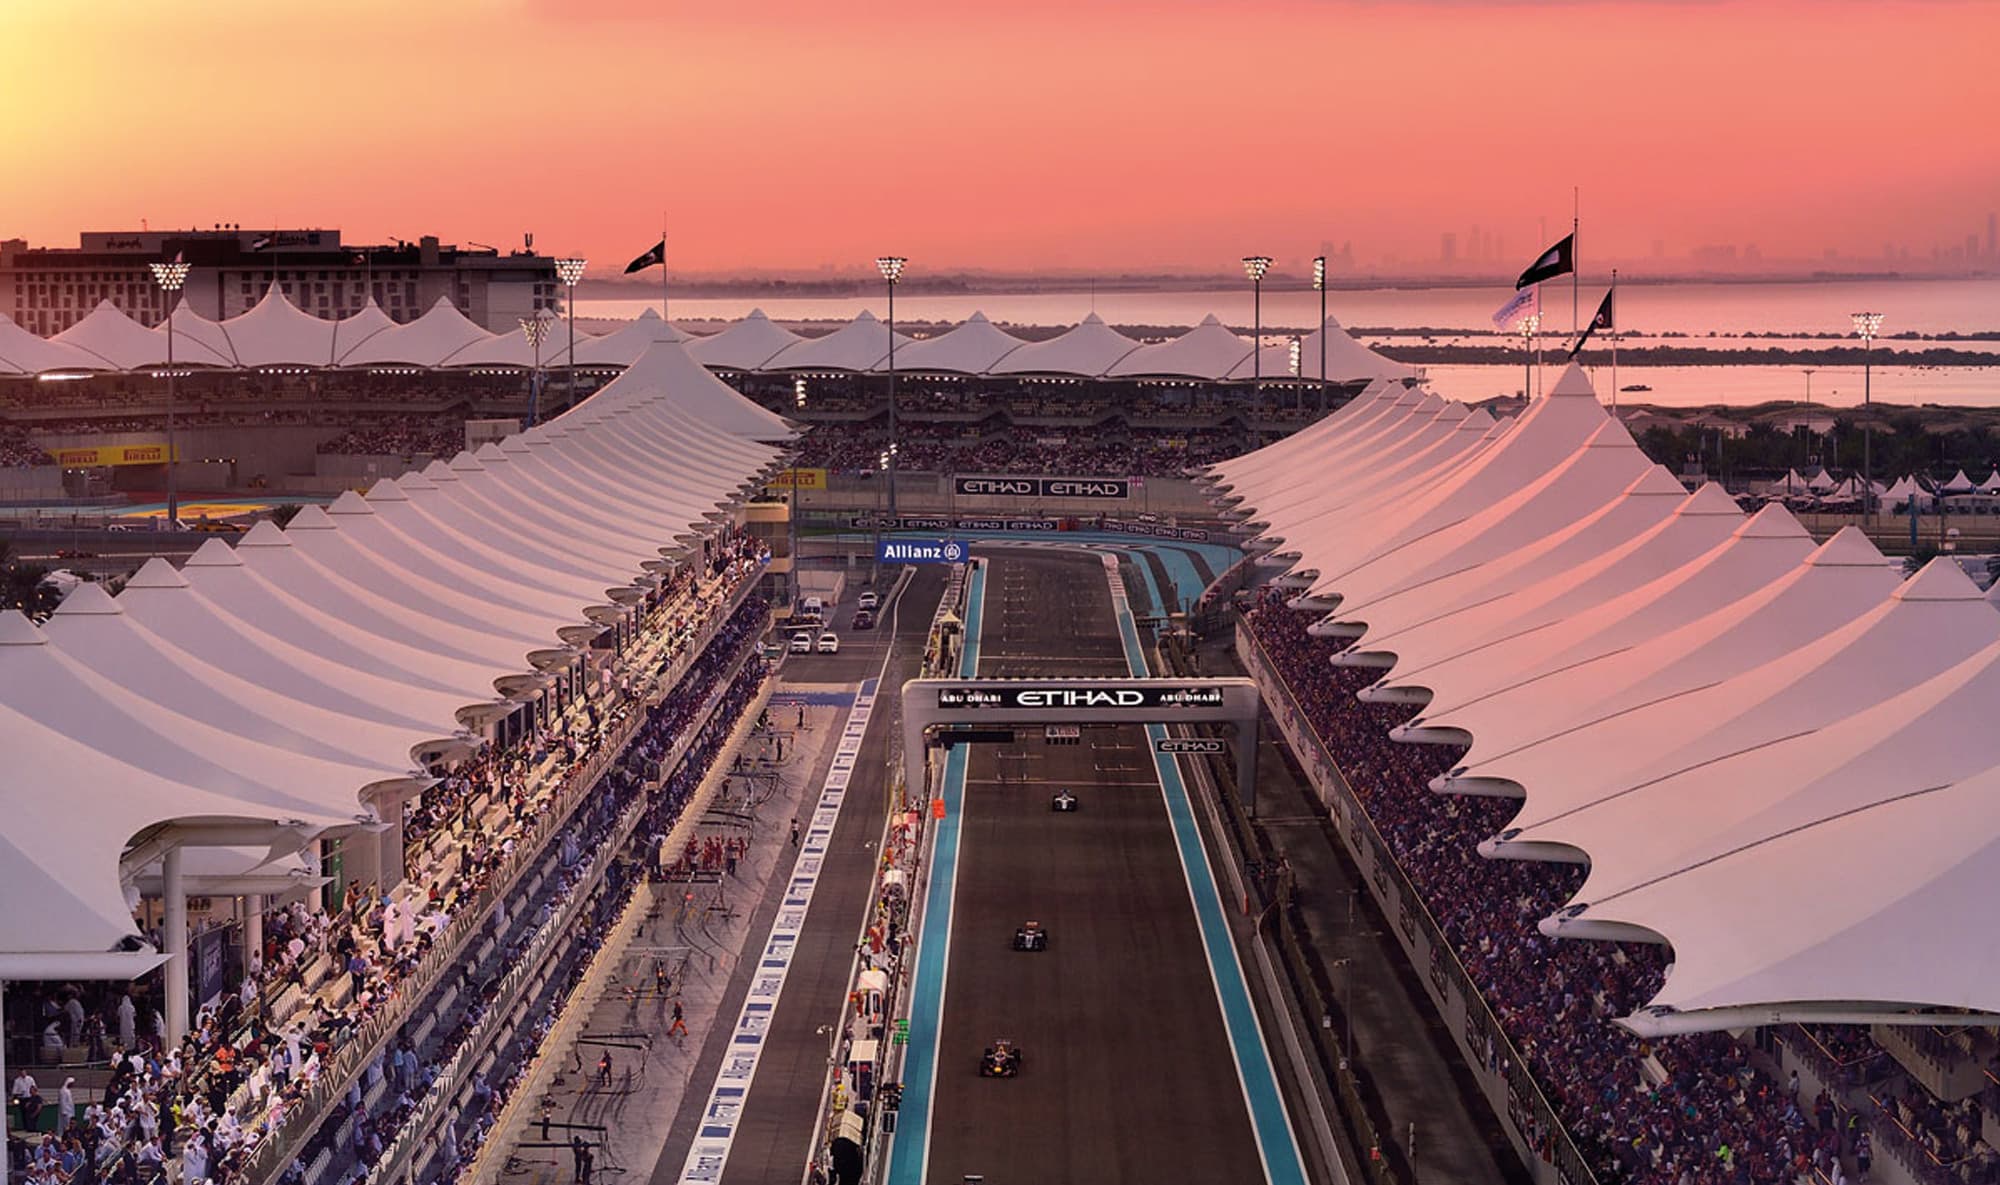 Abu Dhabi Grand Prix grid